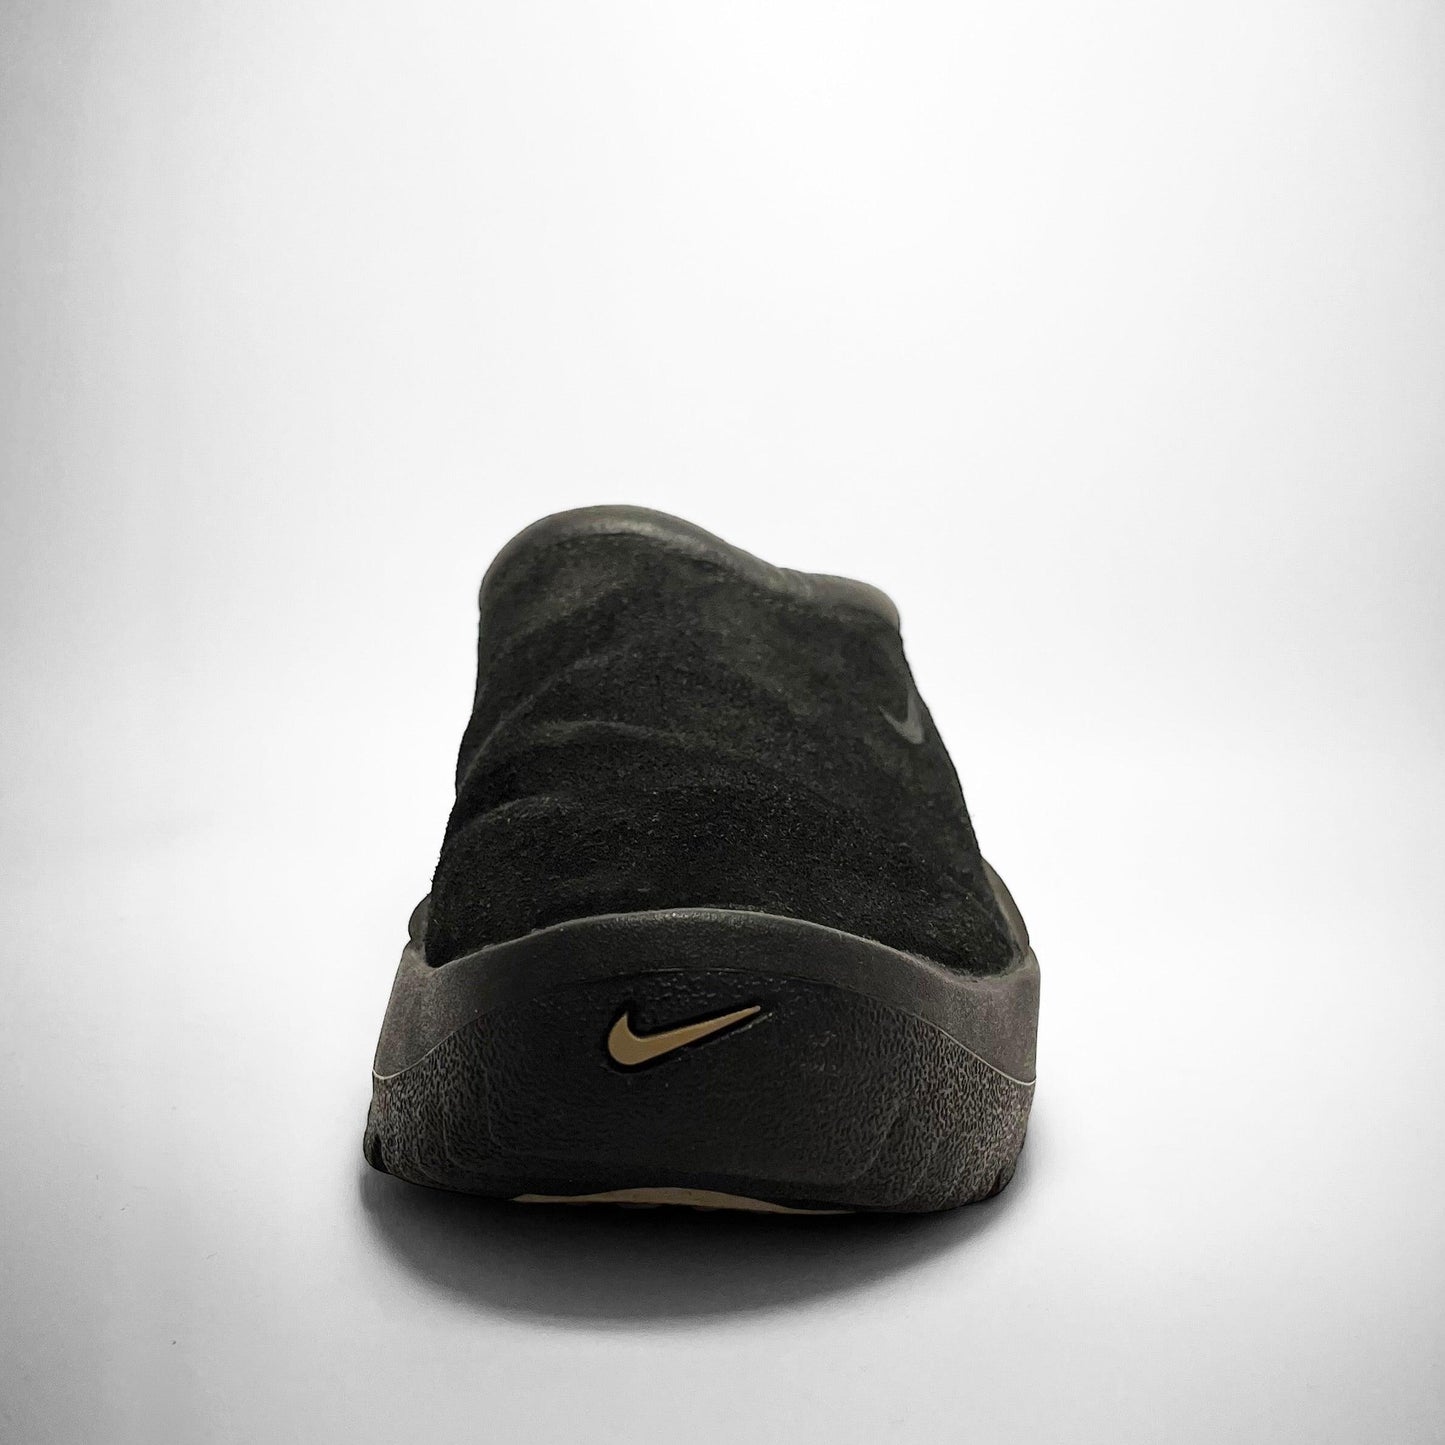 Nike ACG Rufus (2000) - Known Source